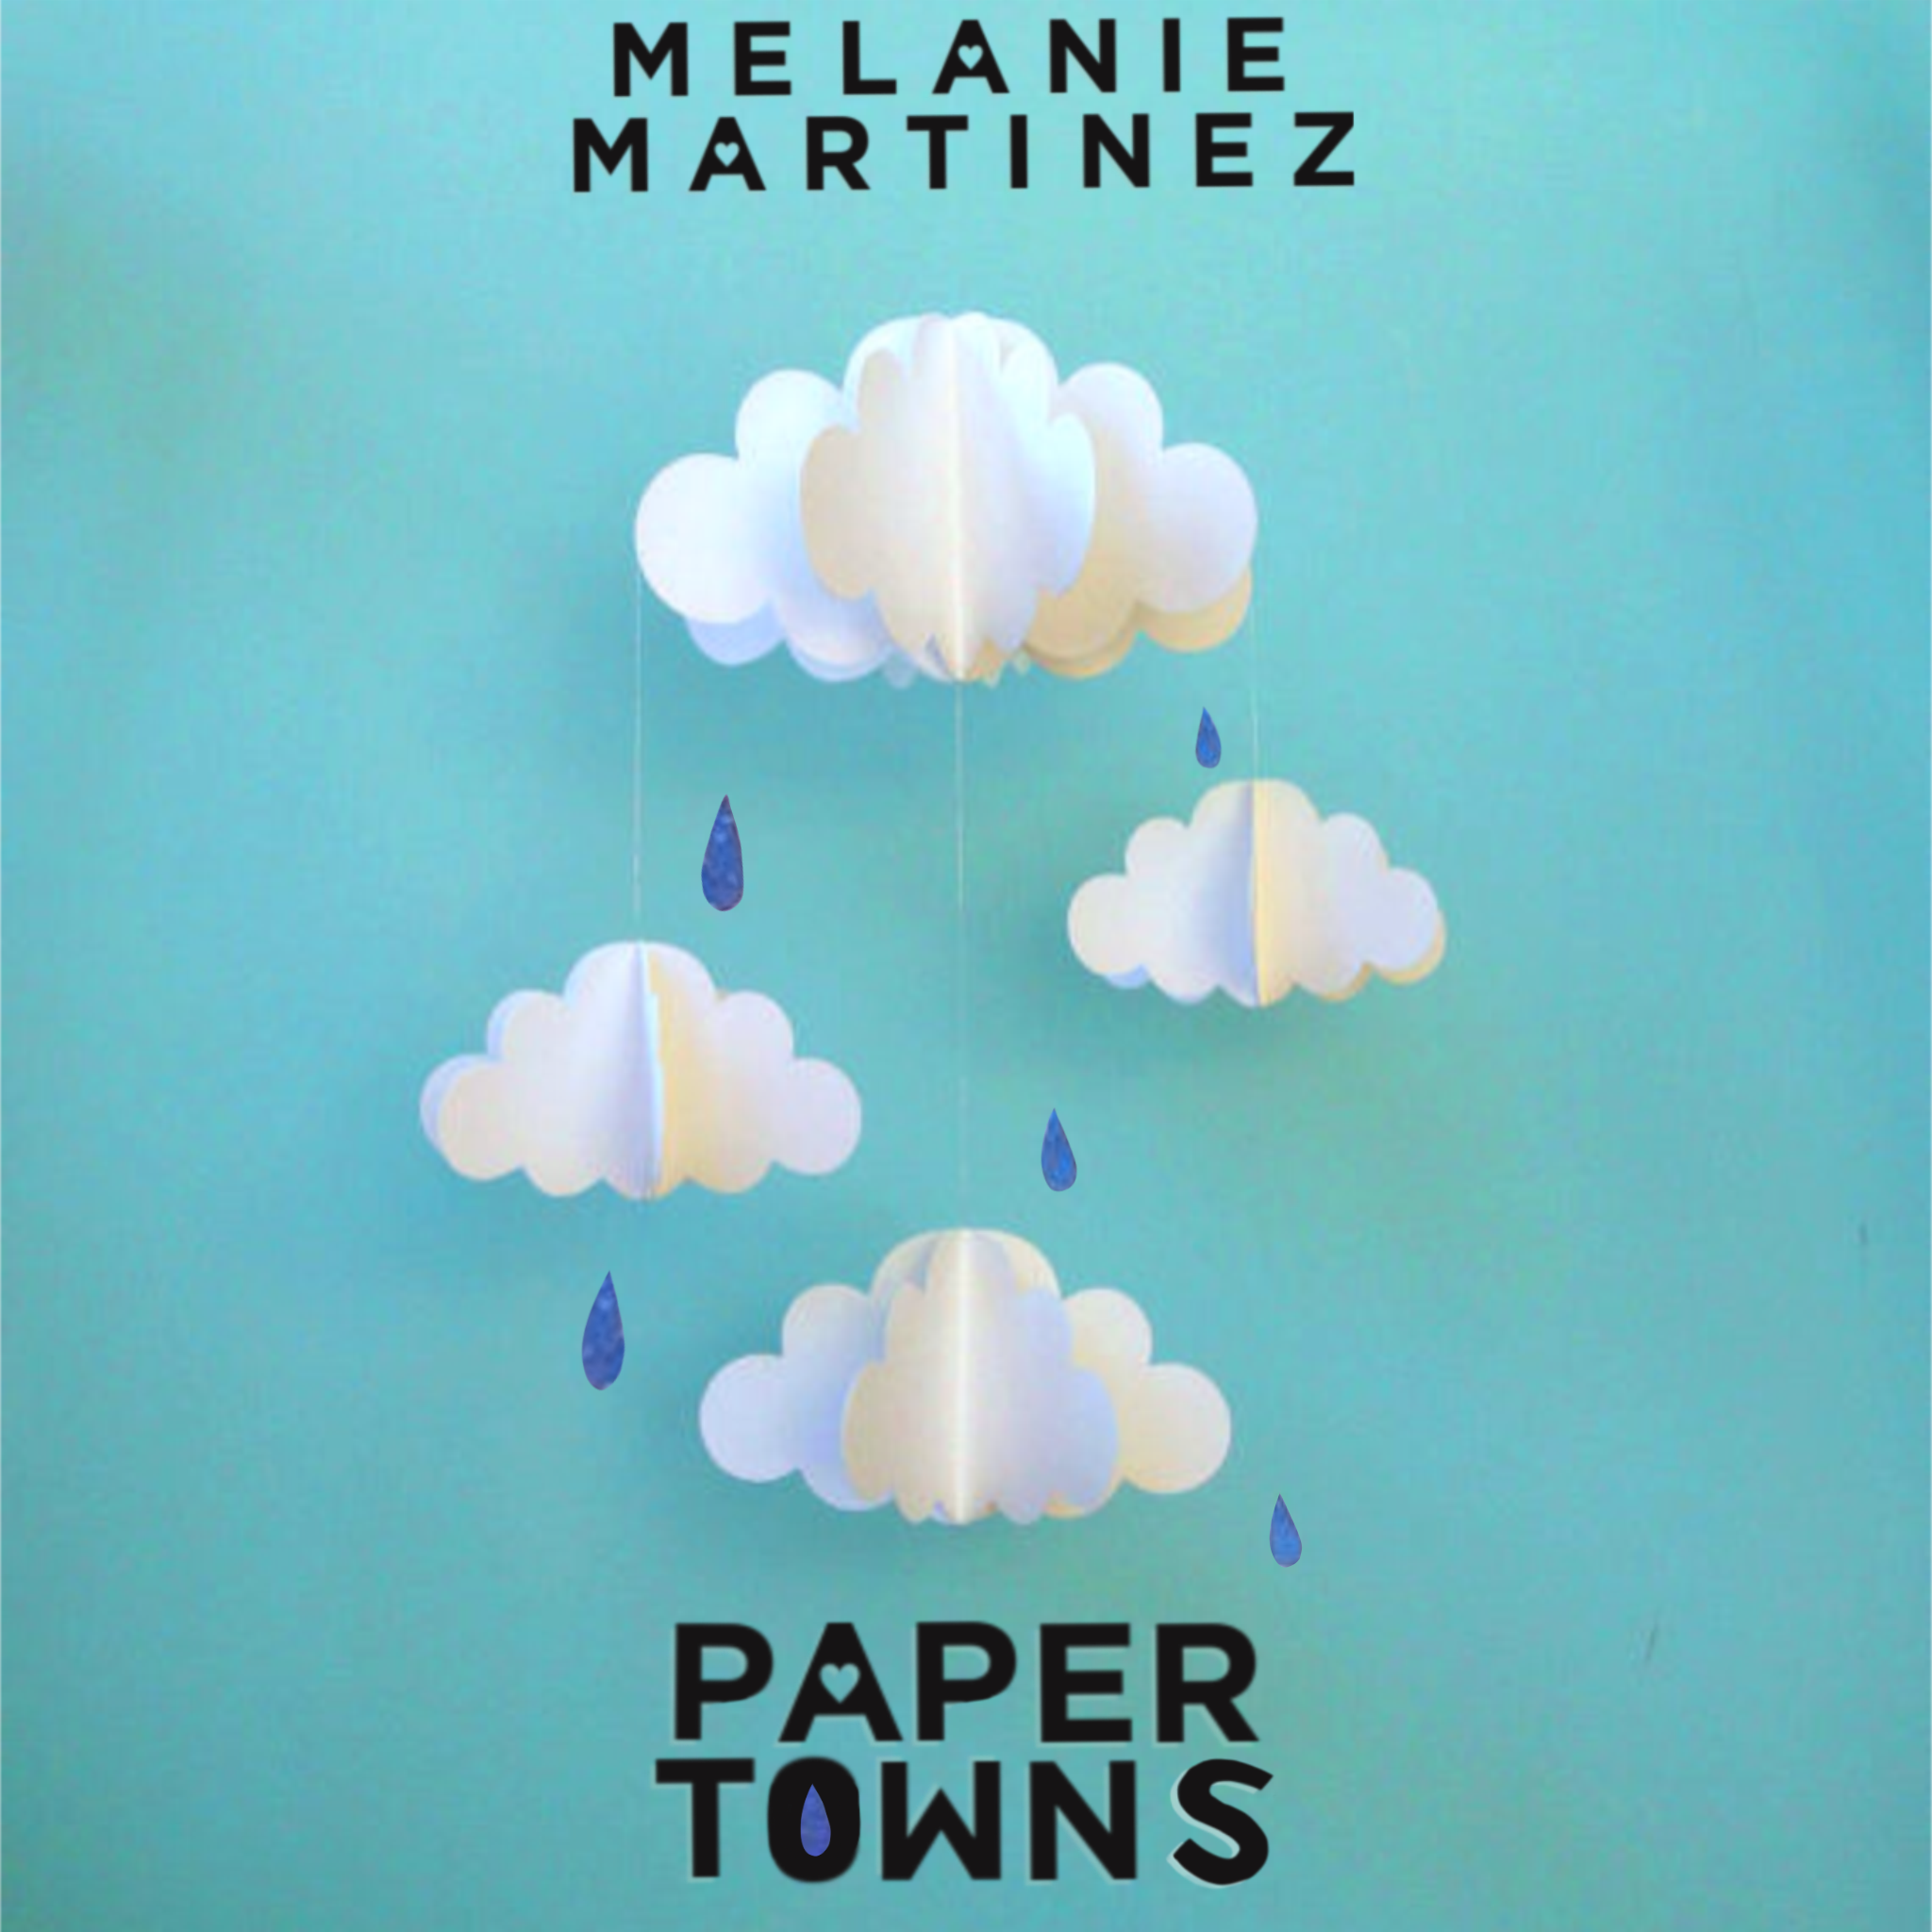 Melanie Martinez discography - Wikipedia